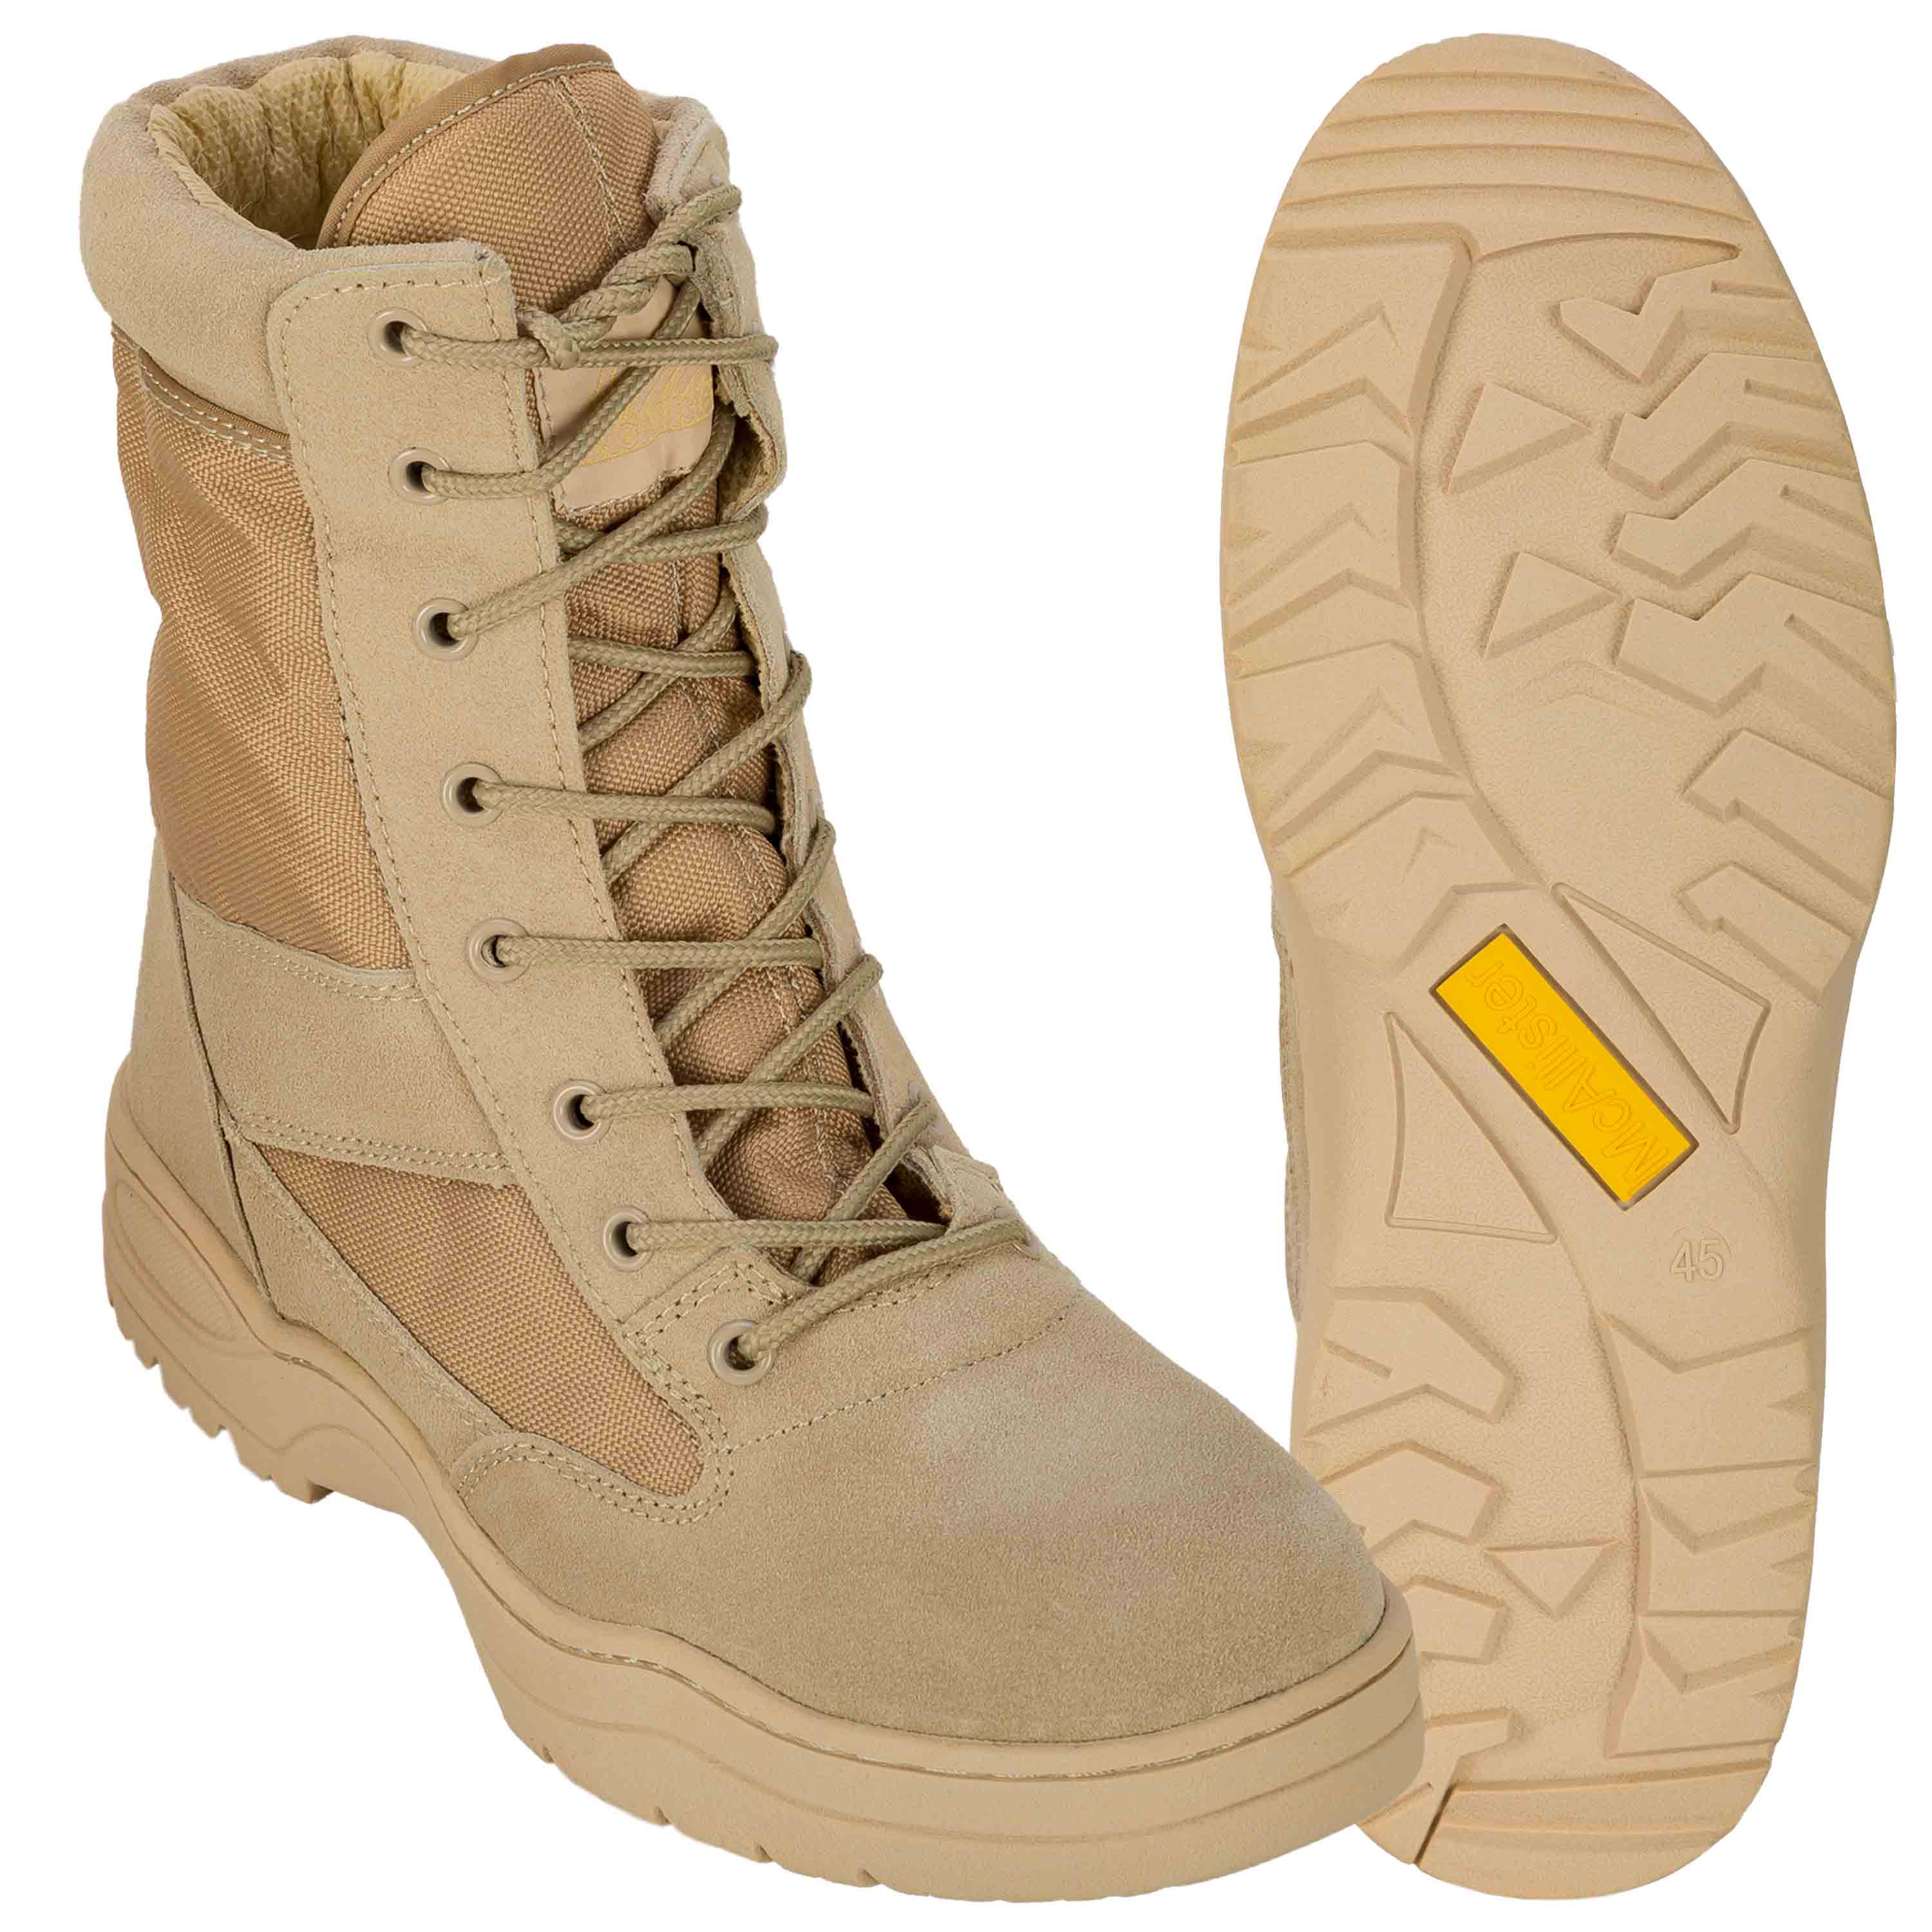 Outdoor Safari Boots khaki by ASMC